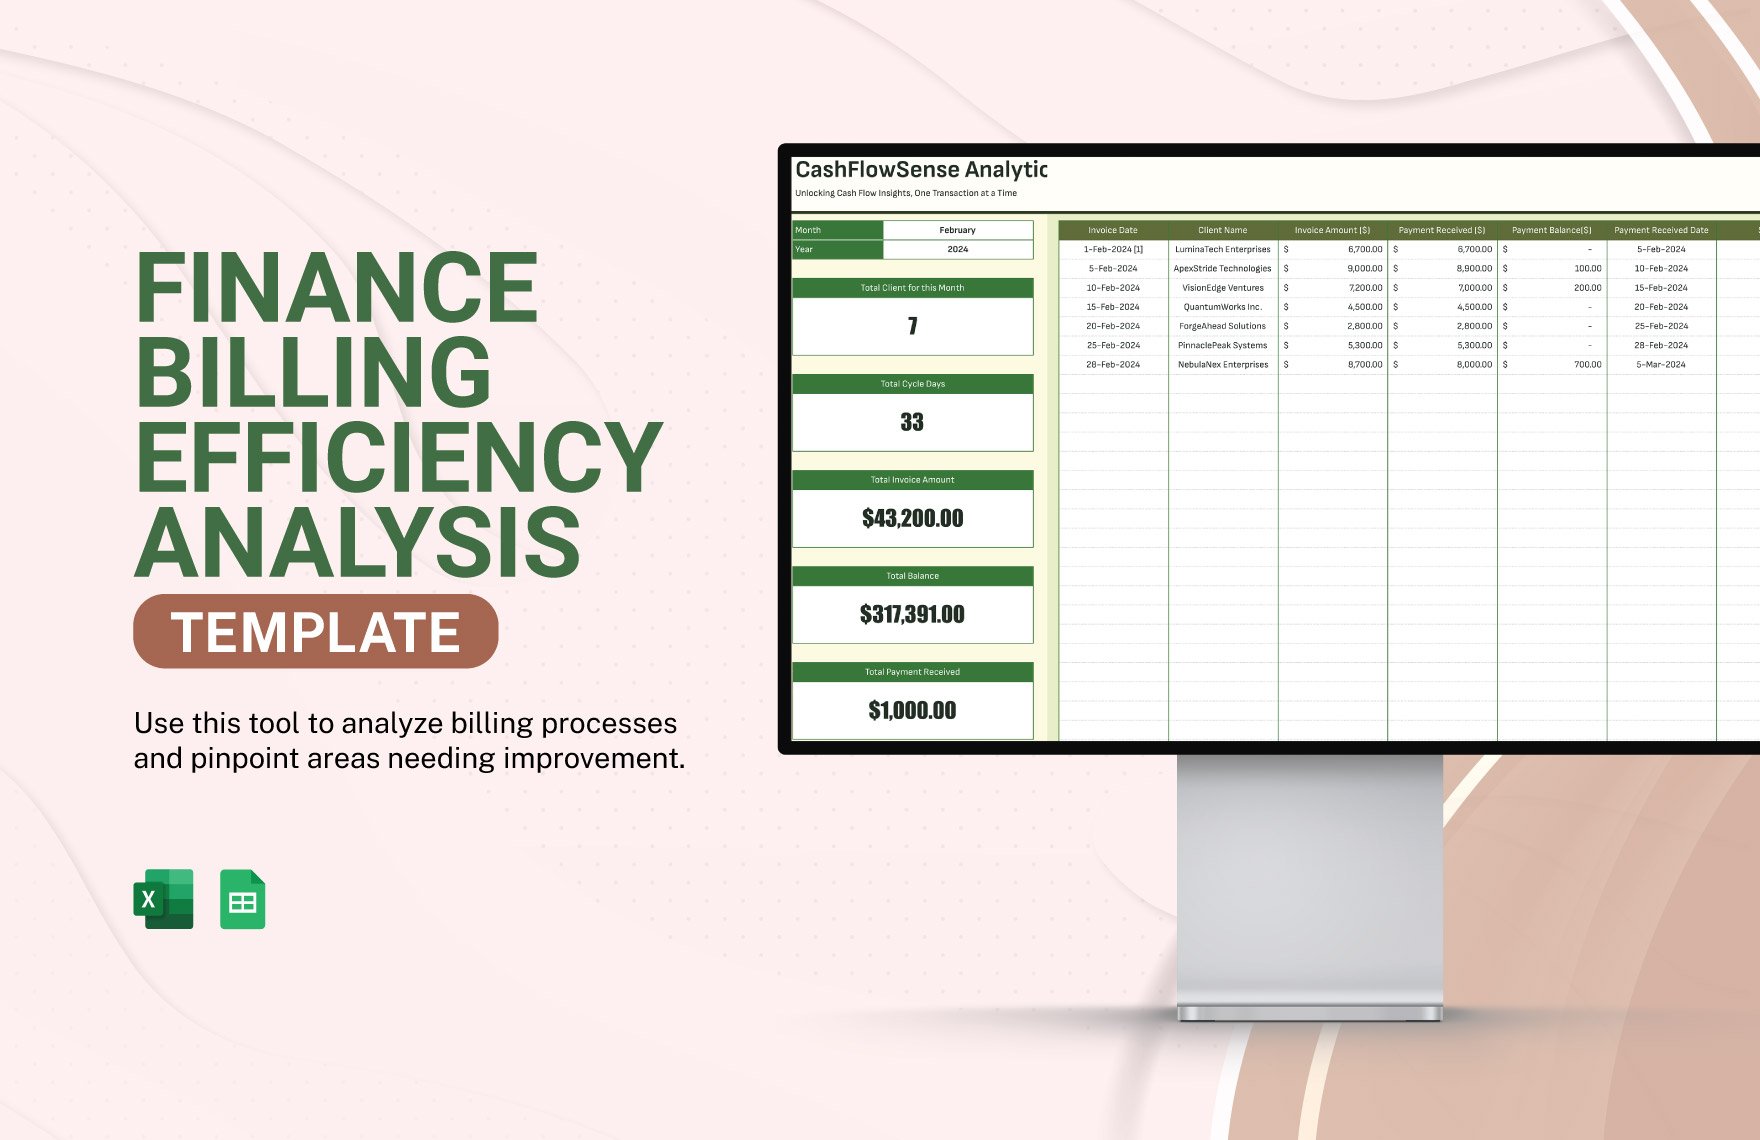 Finance Billing Efficiency Analysis Template